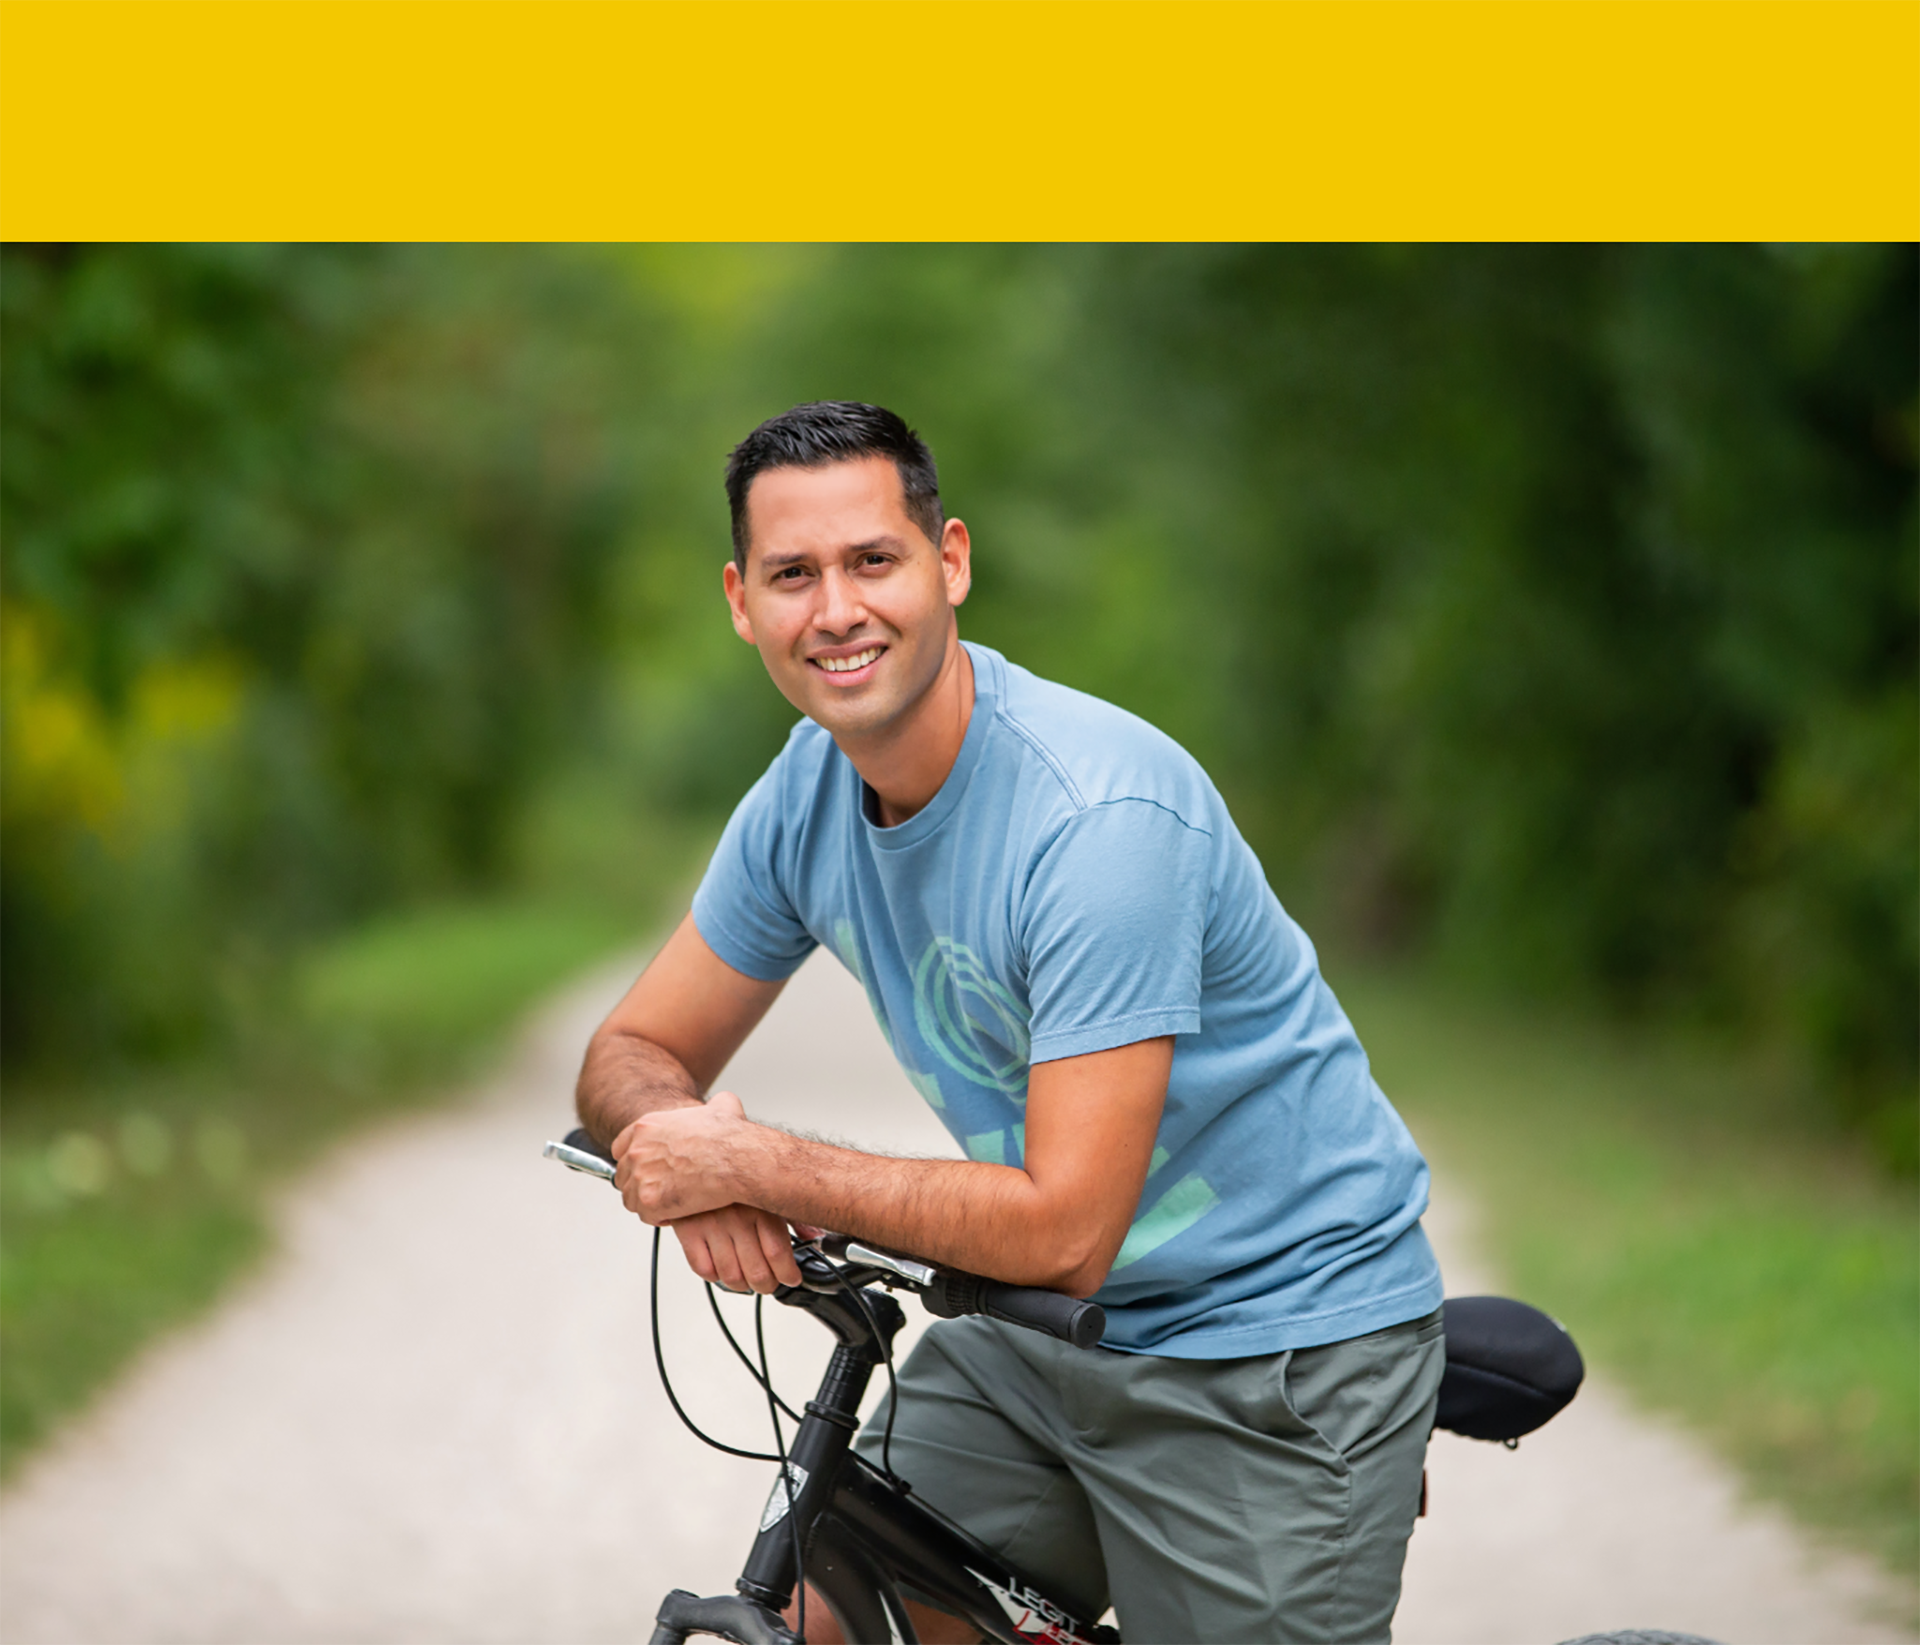 Smiling stroke survivor Jonathan Arevaln sitting on a bike